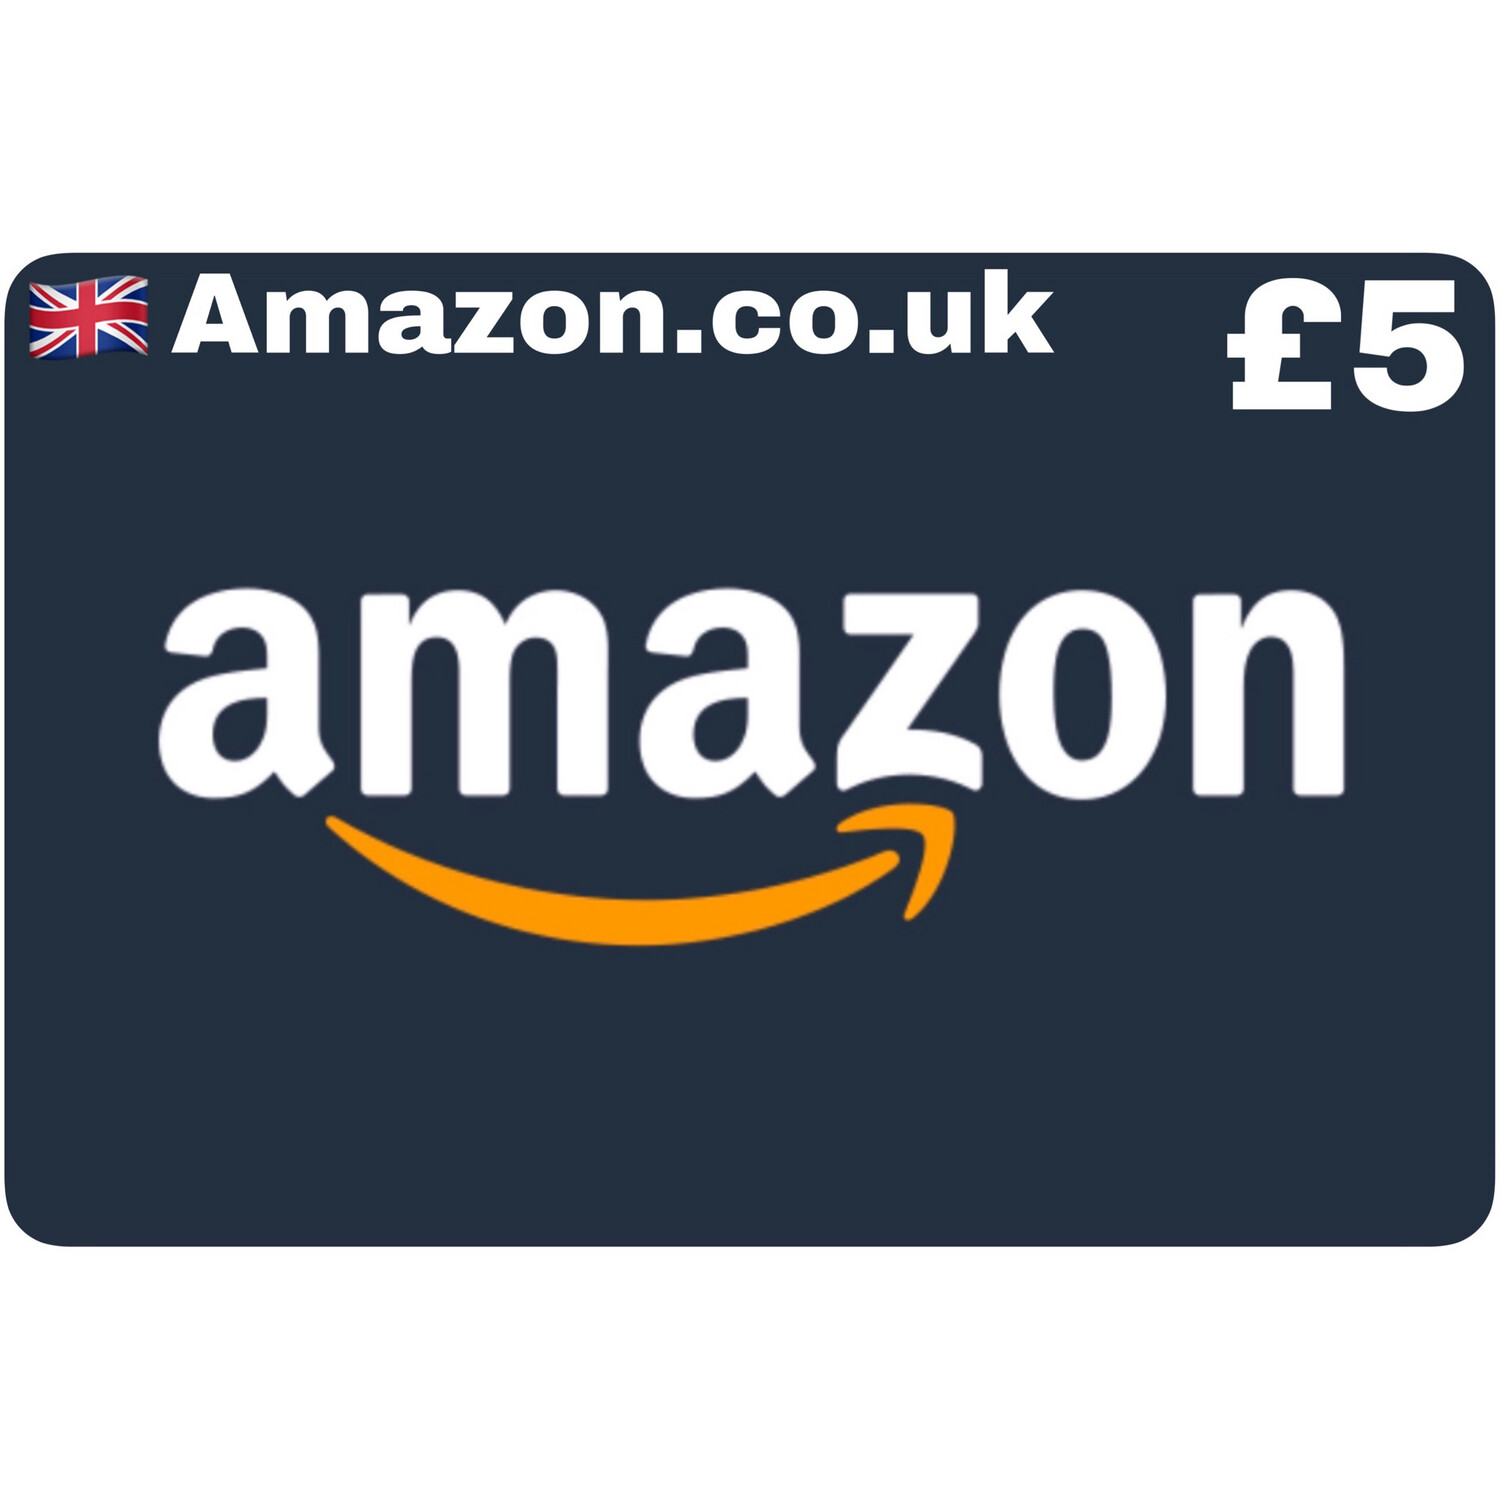 Amazon.co.uk Gift Card UK GBP £5